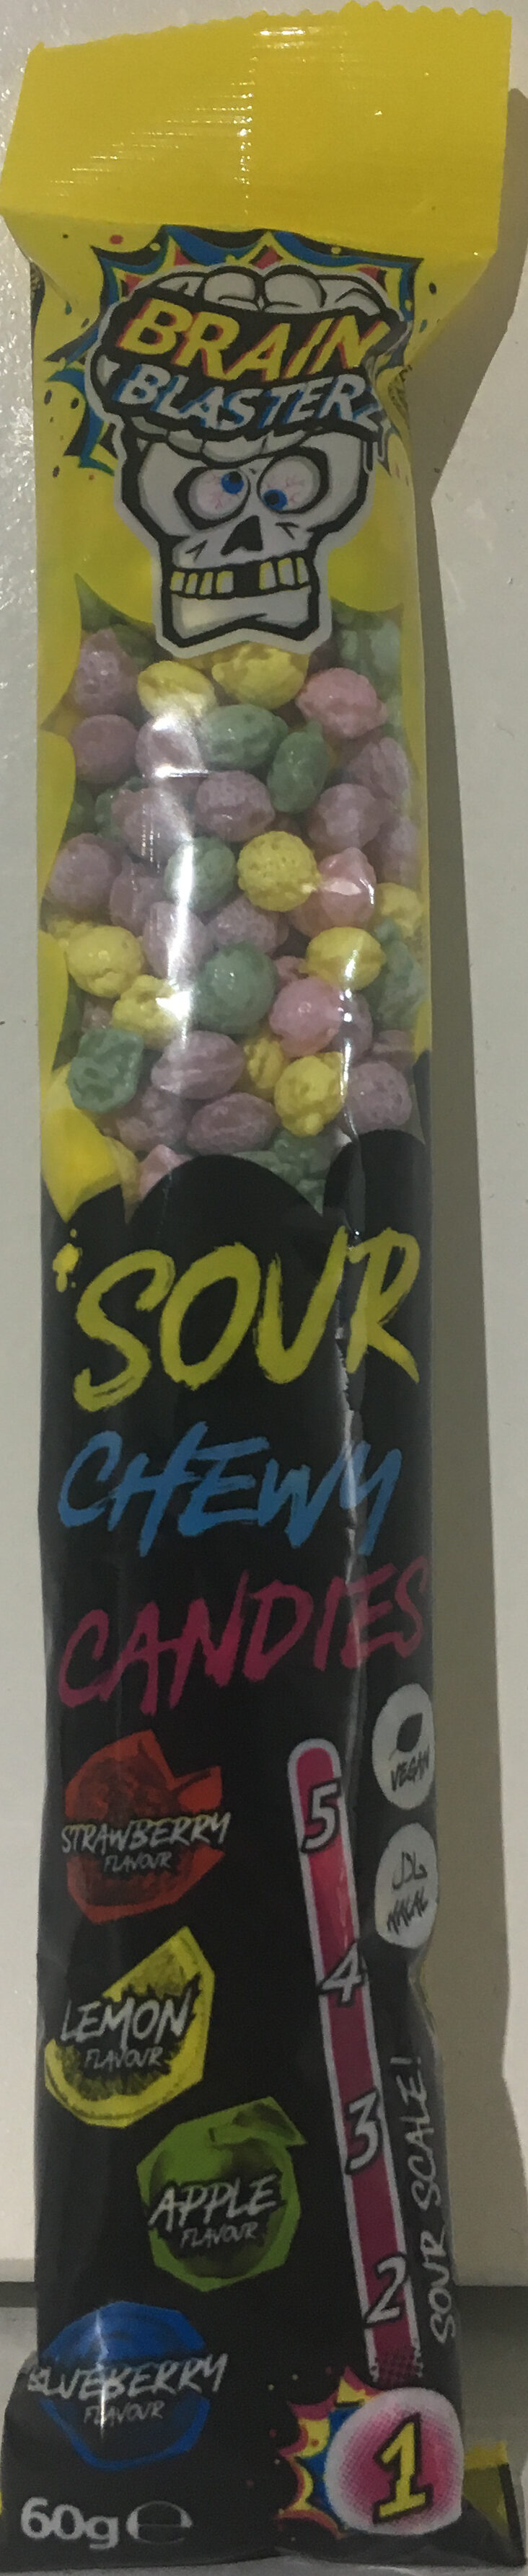 Sour Chewy Candies - Produkt - en